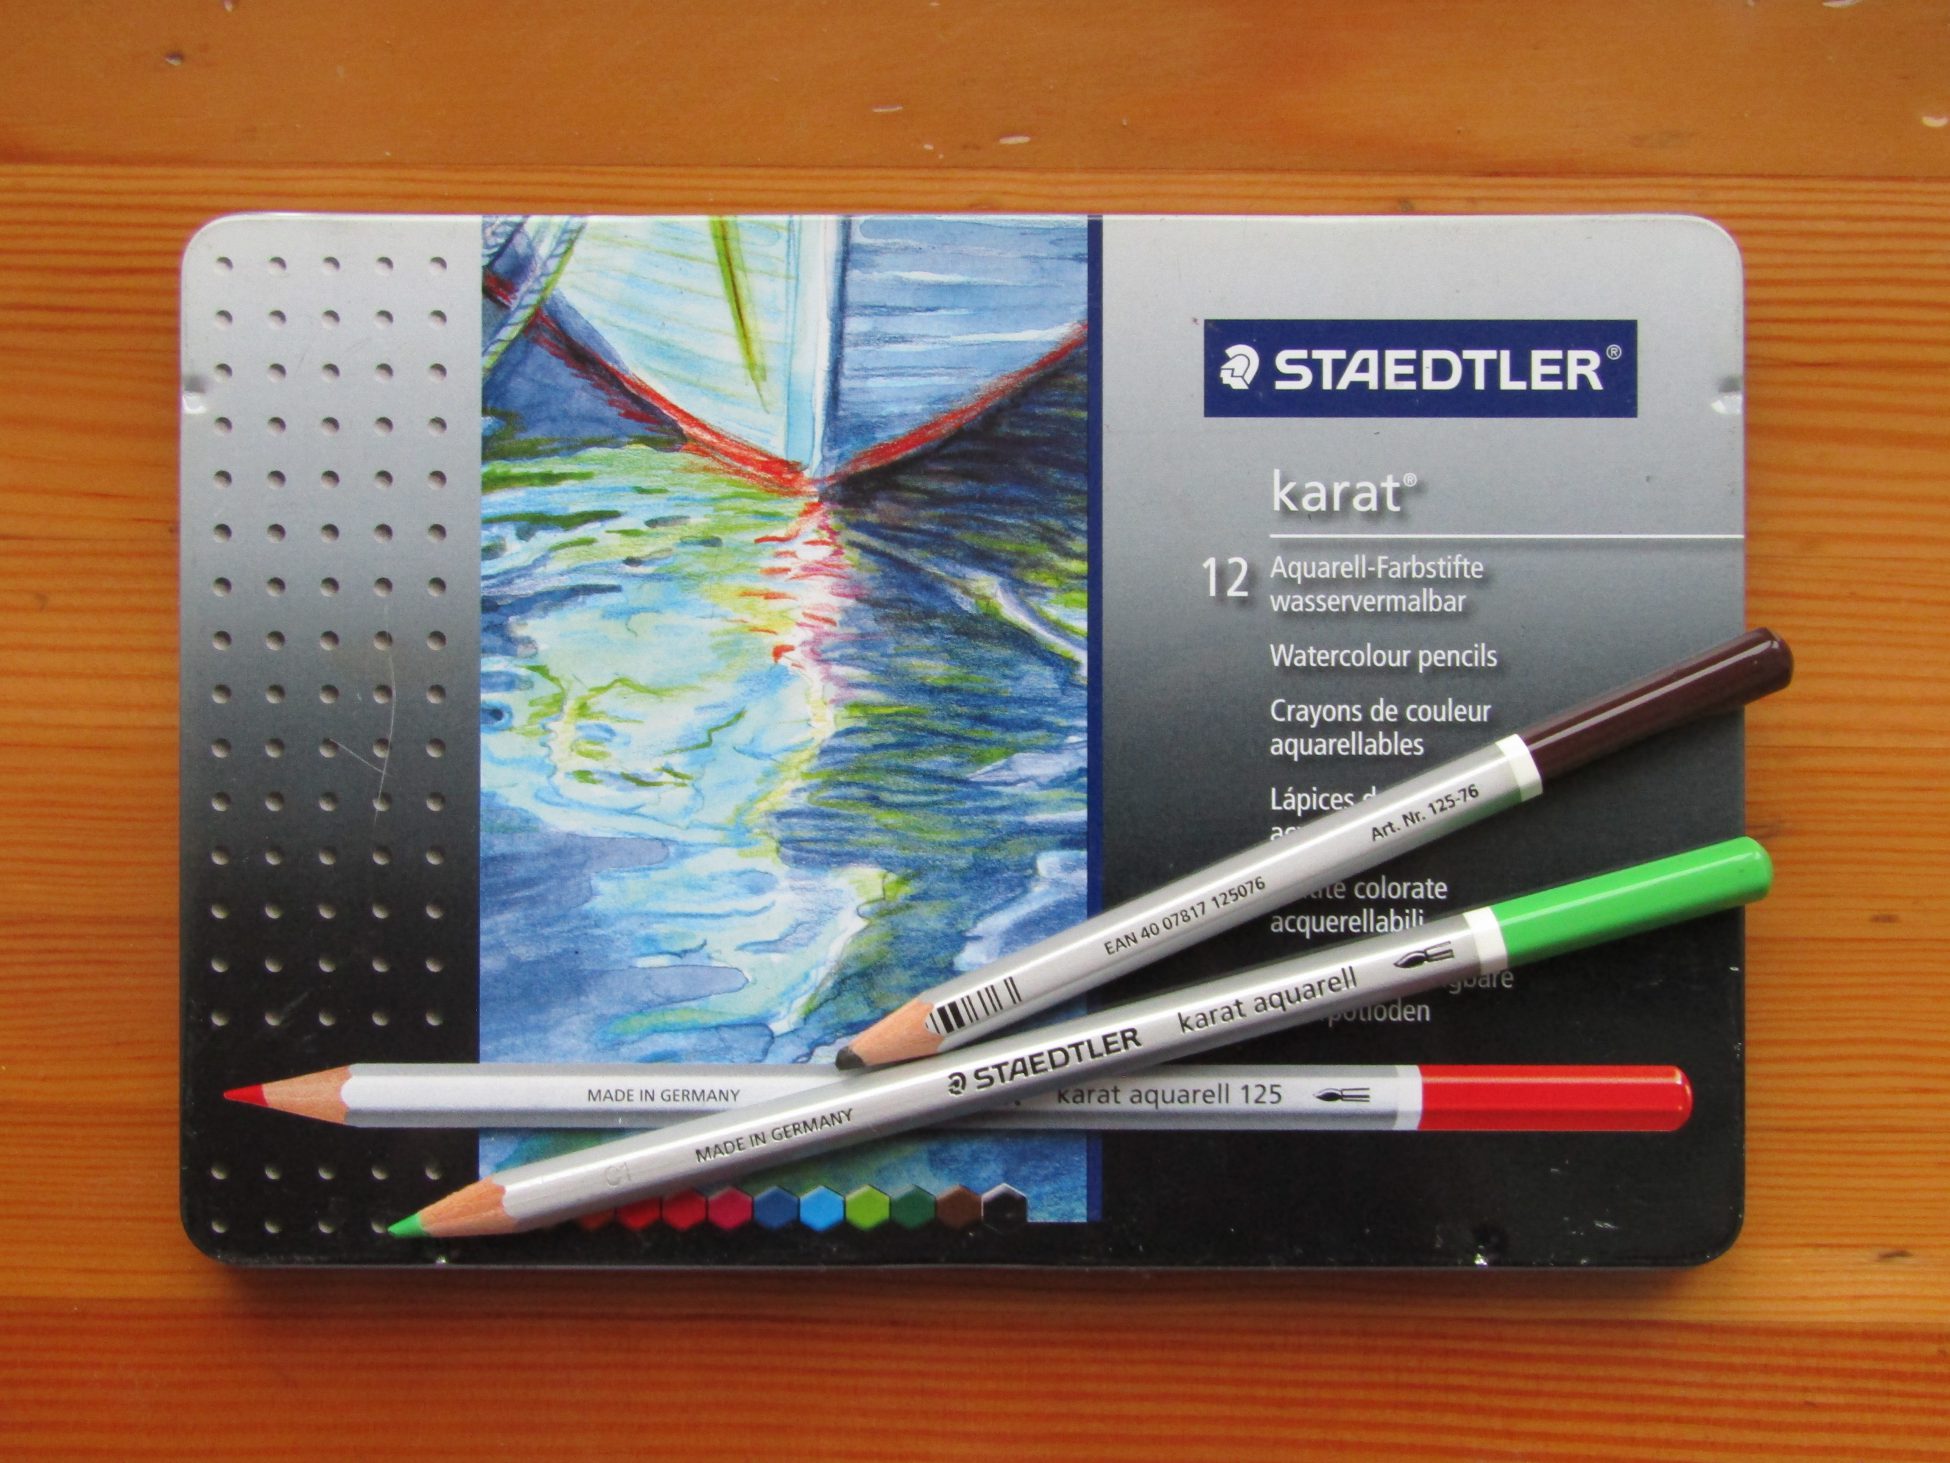 Professional Watercolor Pencils Staedtler Karat: the Main Features